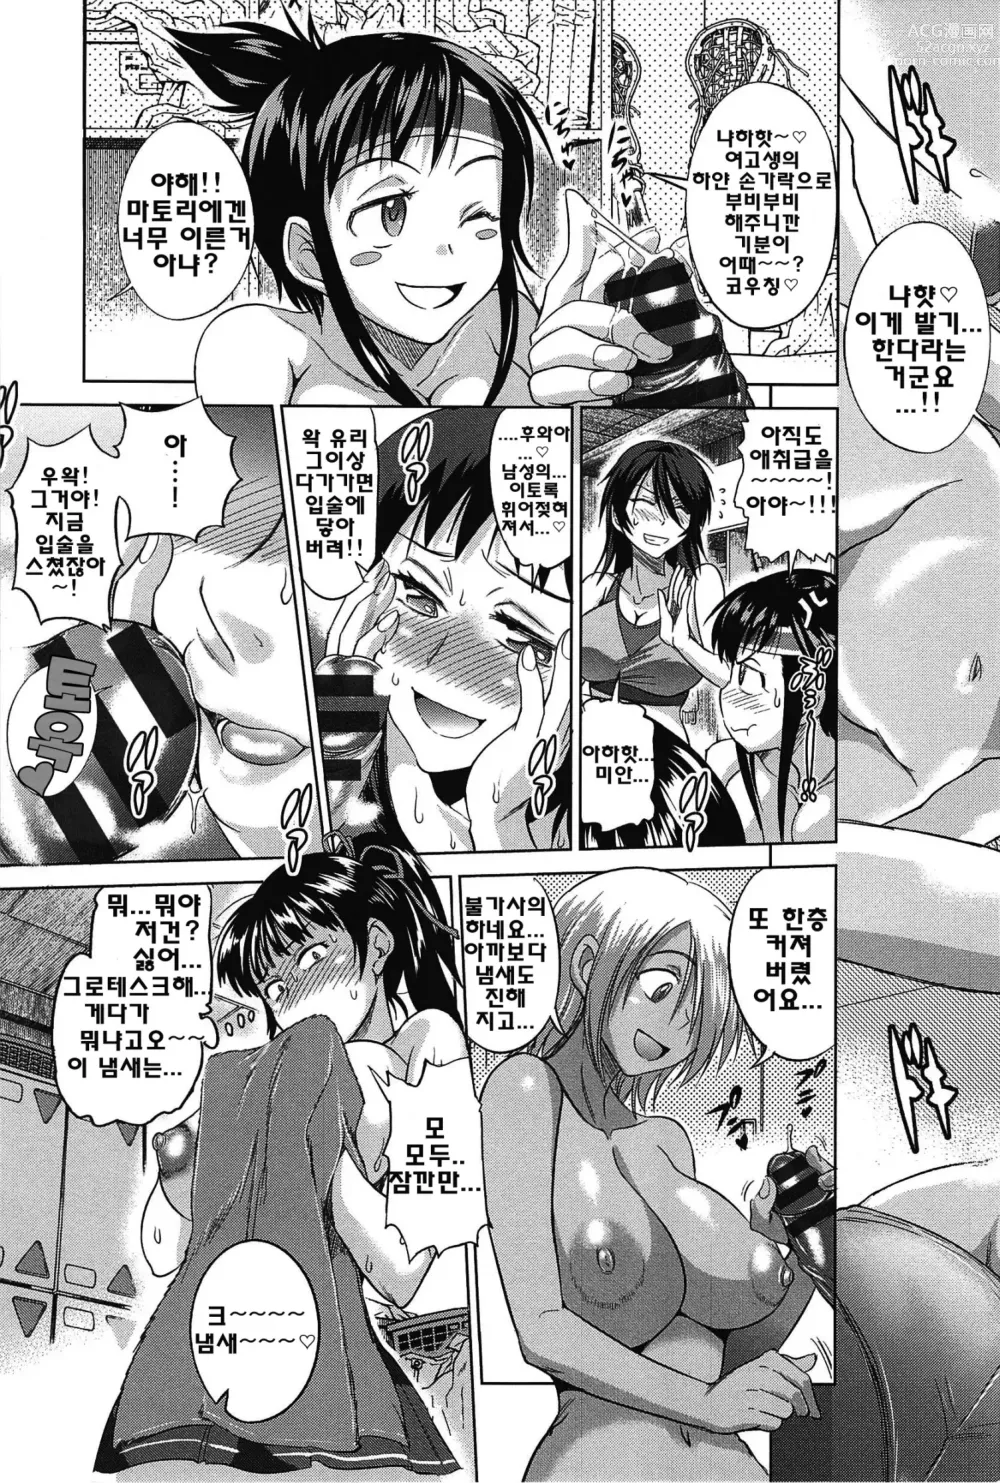 Page 7 of manga Joshi Luck!